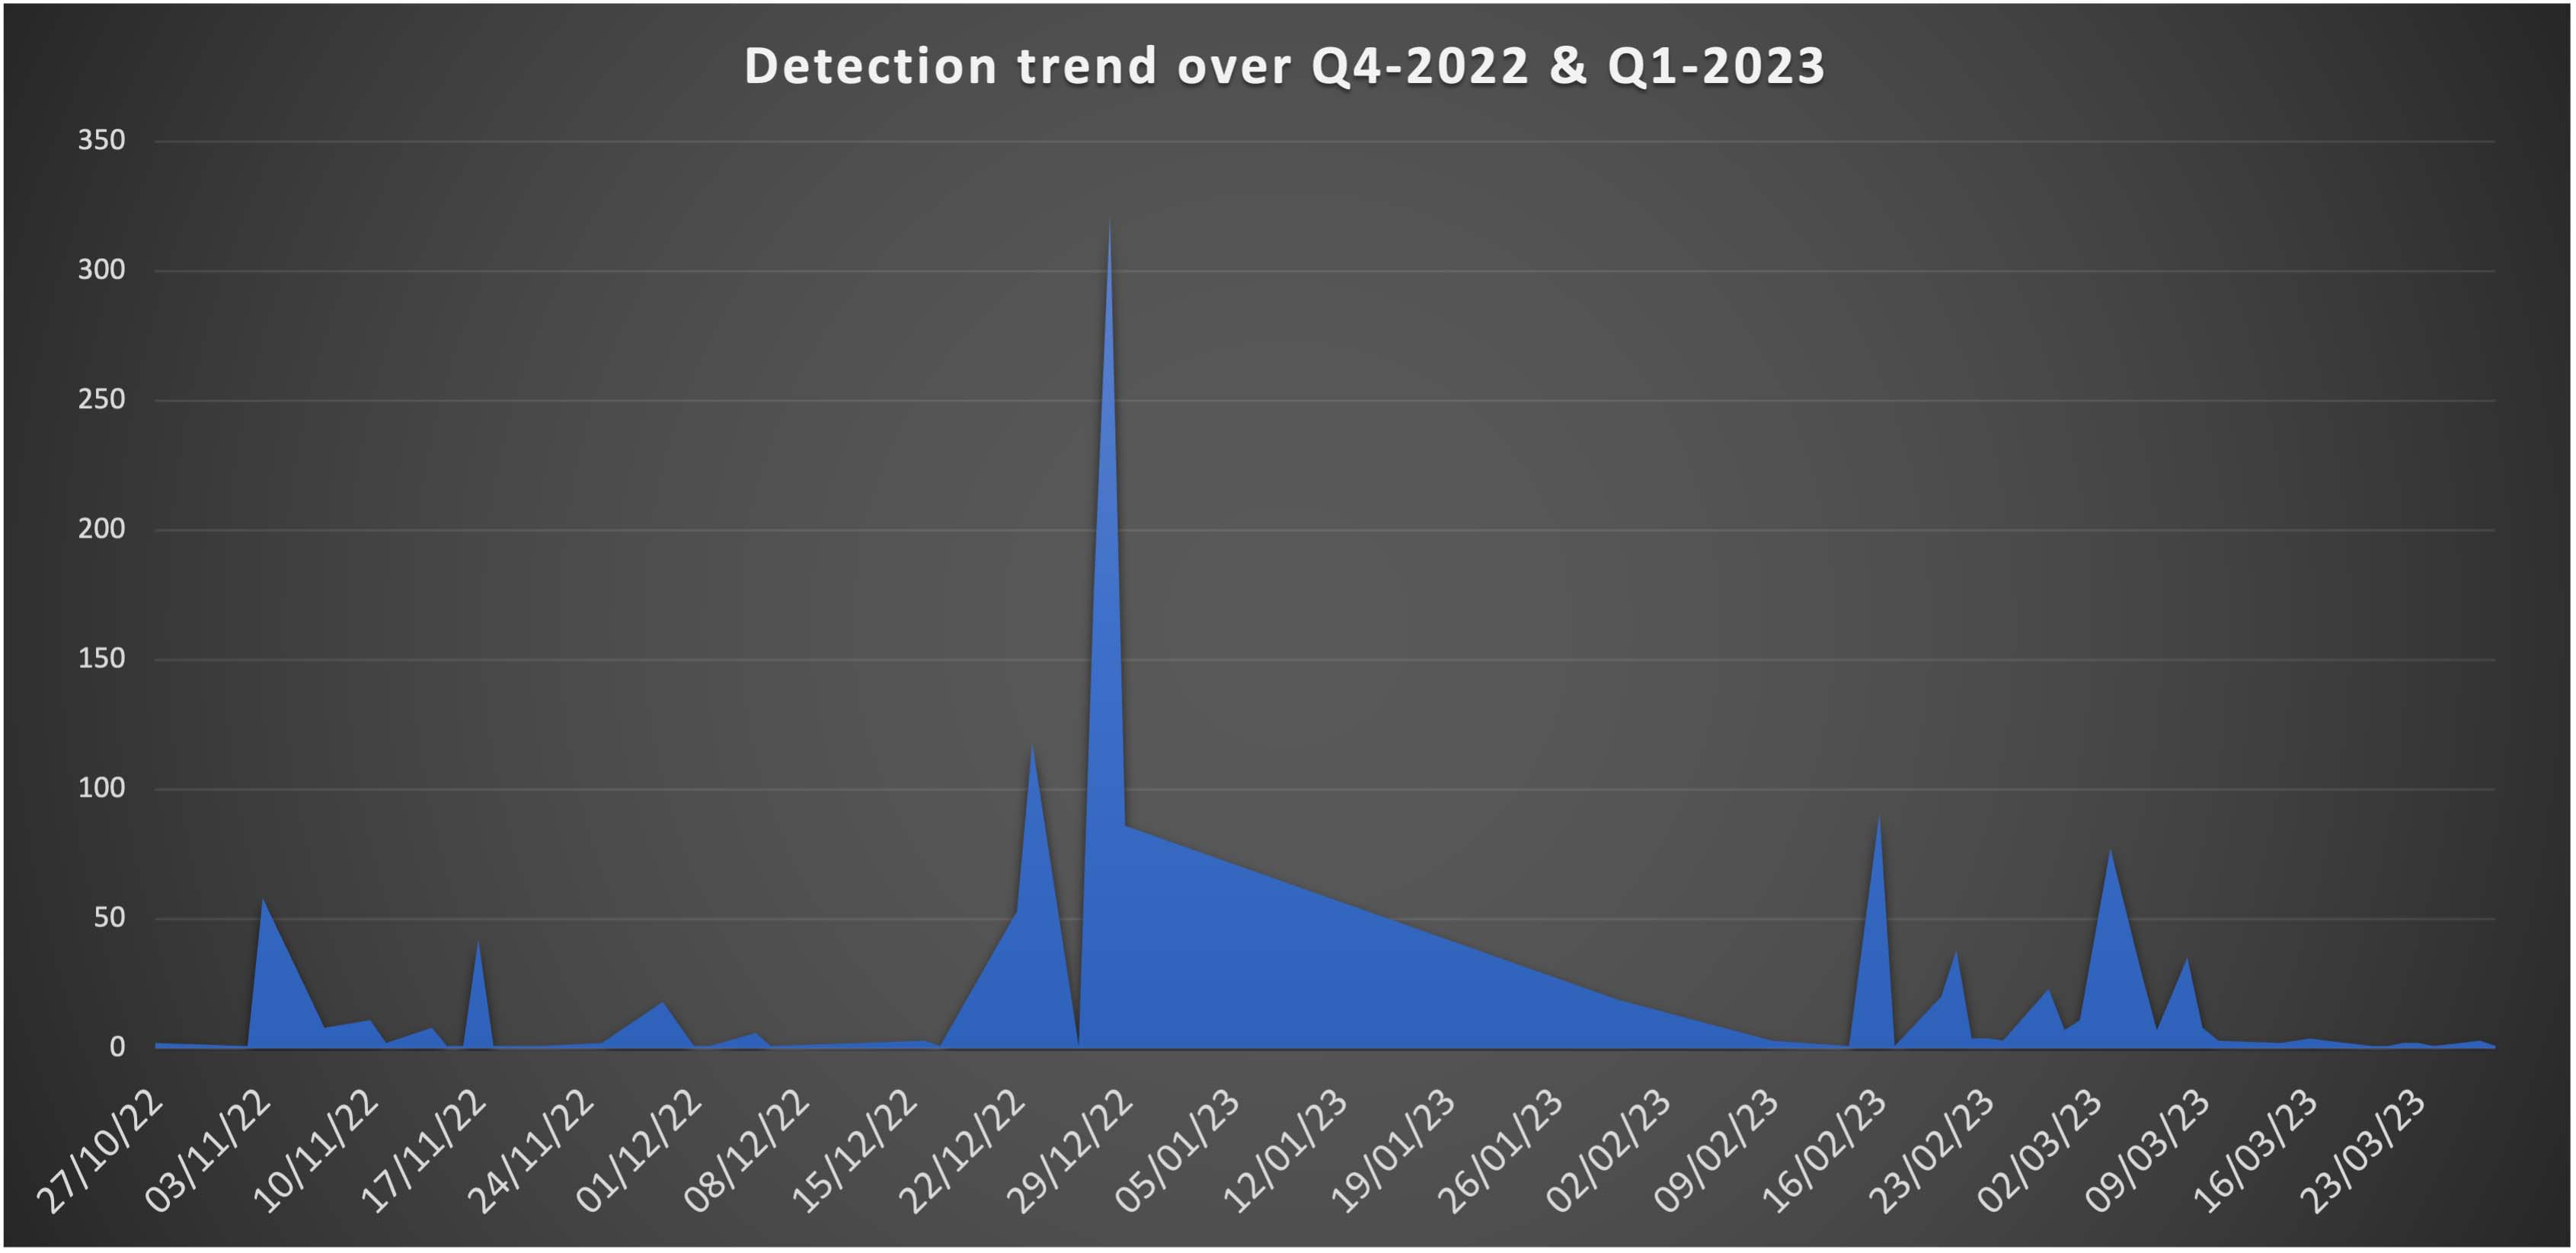 Figure 31: Detection trend over Q4-2022 & Q1-2023 